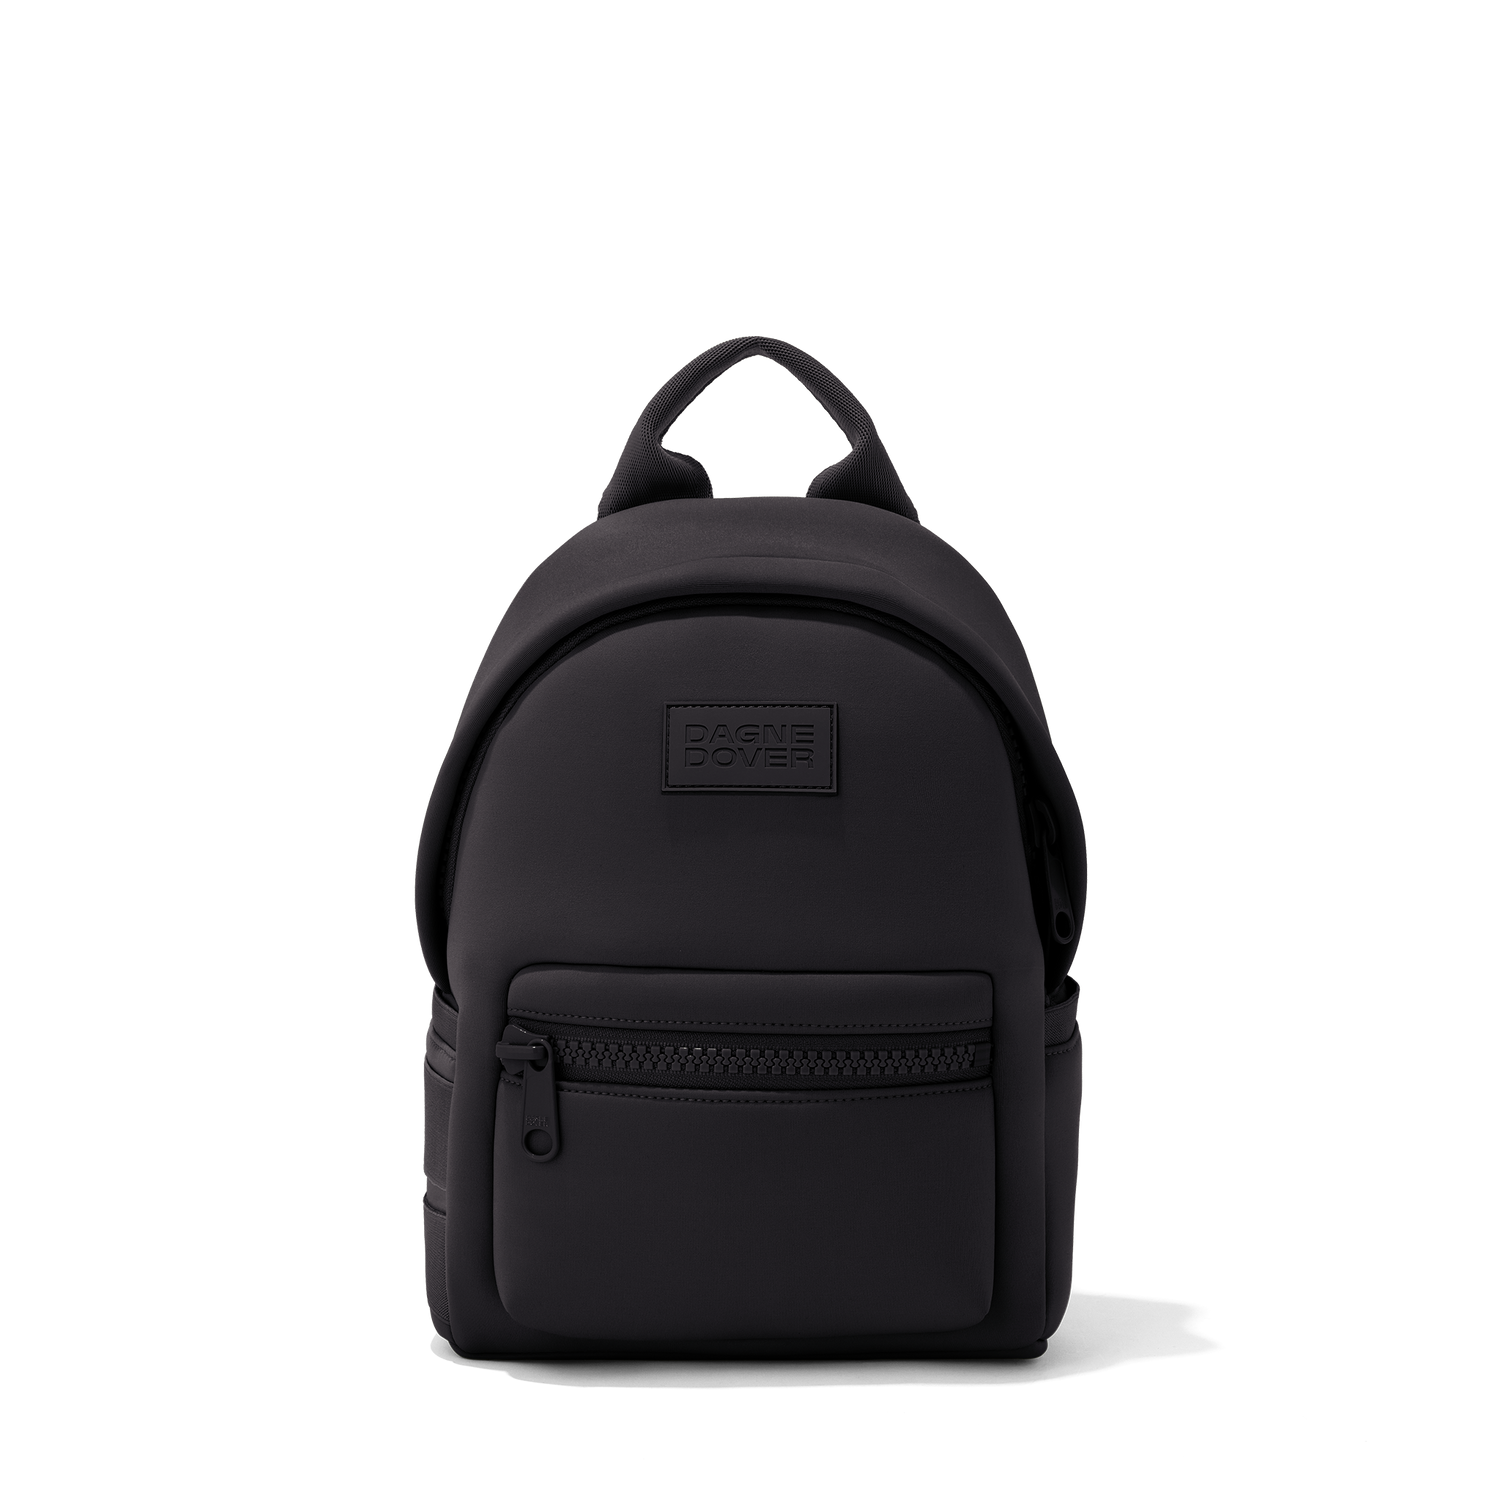 Dagne Dover Dakota Large Backpack  Large backpack, Style inspiration  casual, Backpacks